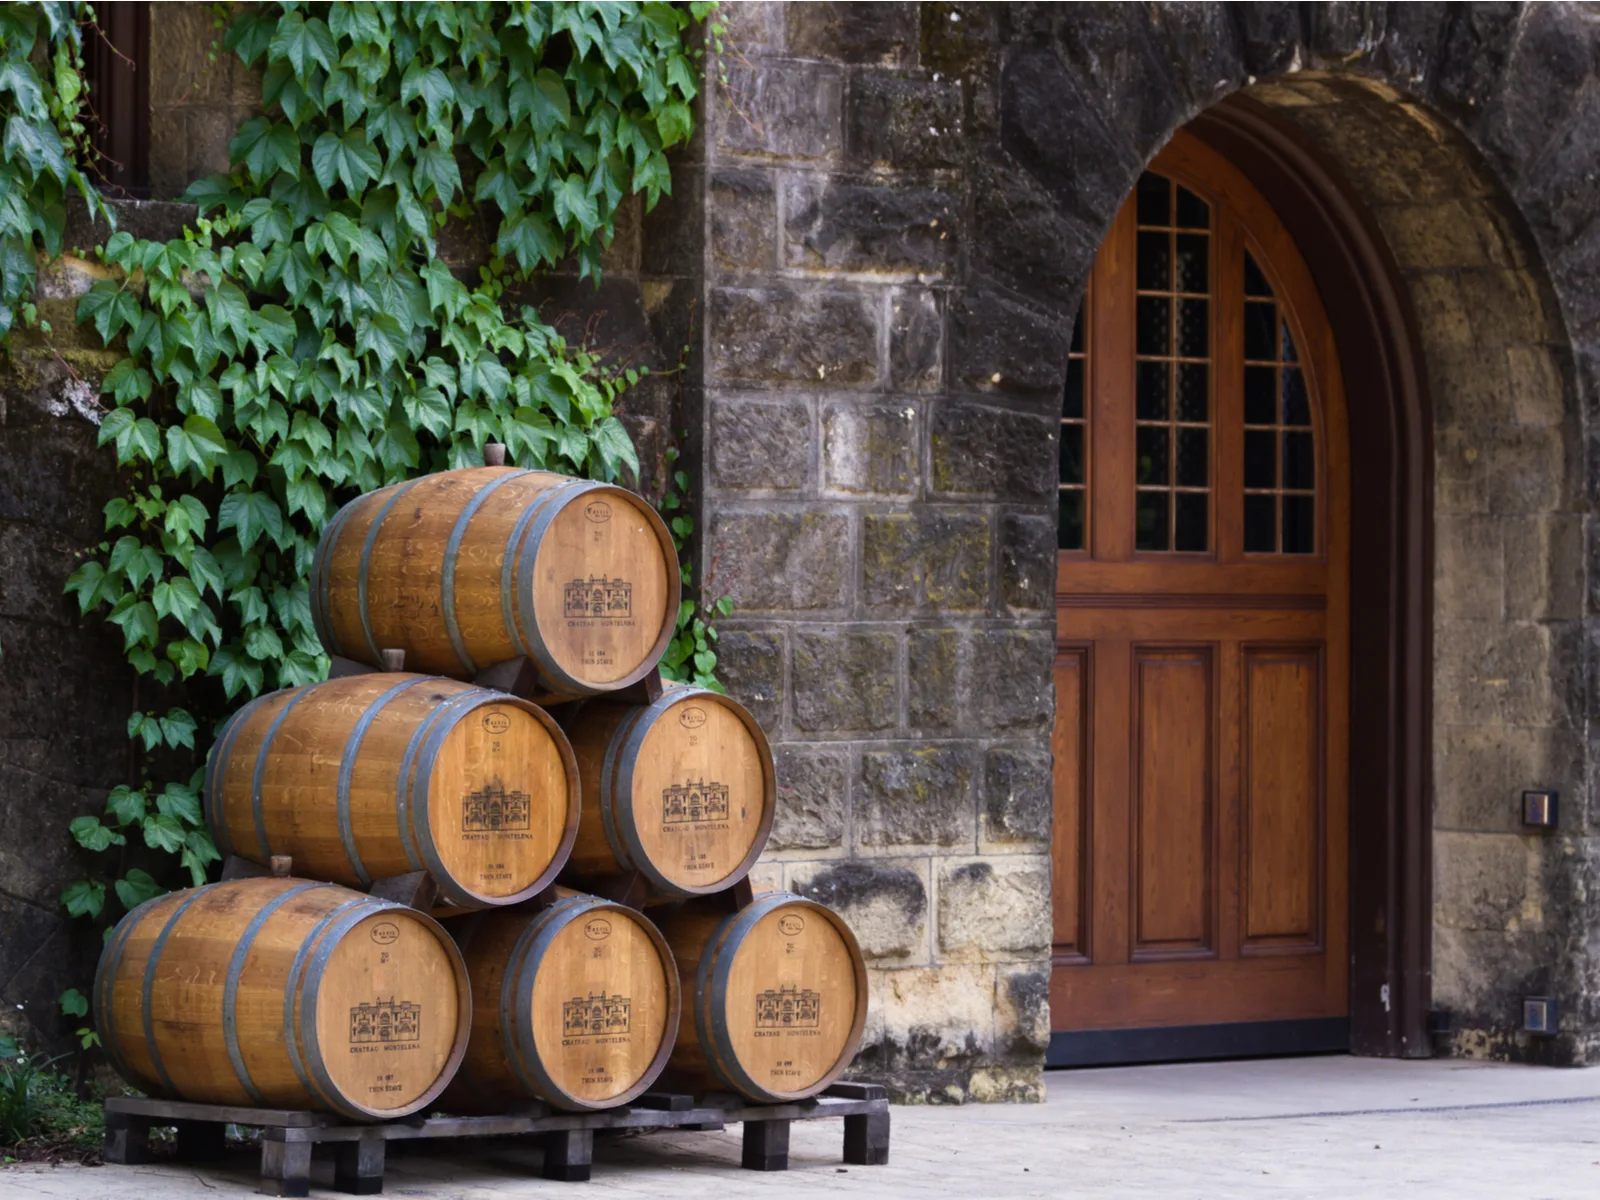 Calistoga, California - May 10 : Wine barrels stacked outside of the Chateau Montelena, May 10 2015 Calistoga, California.